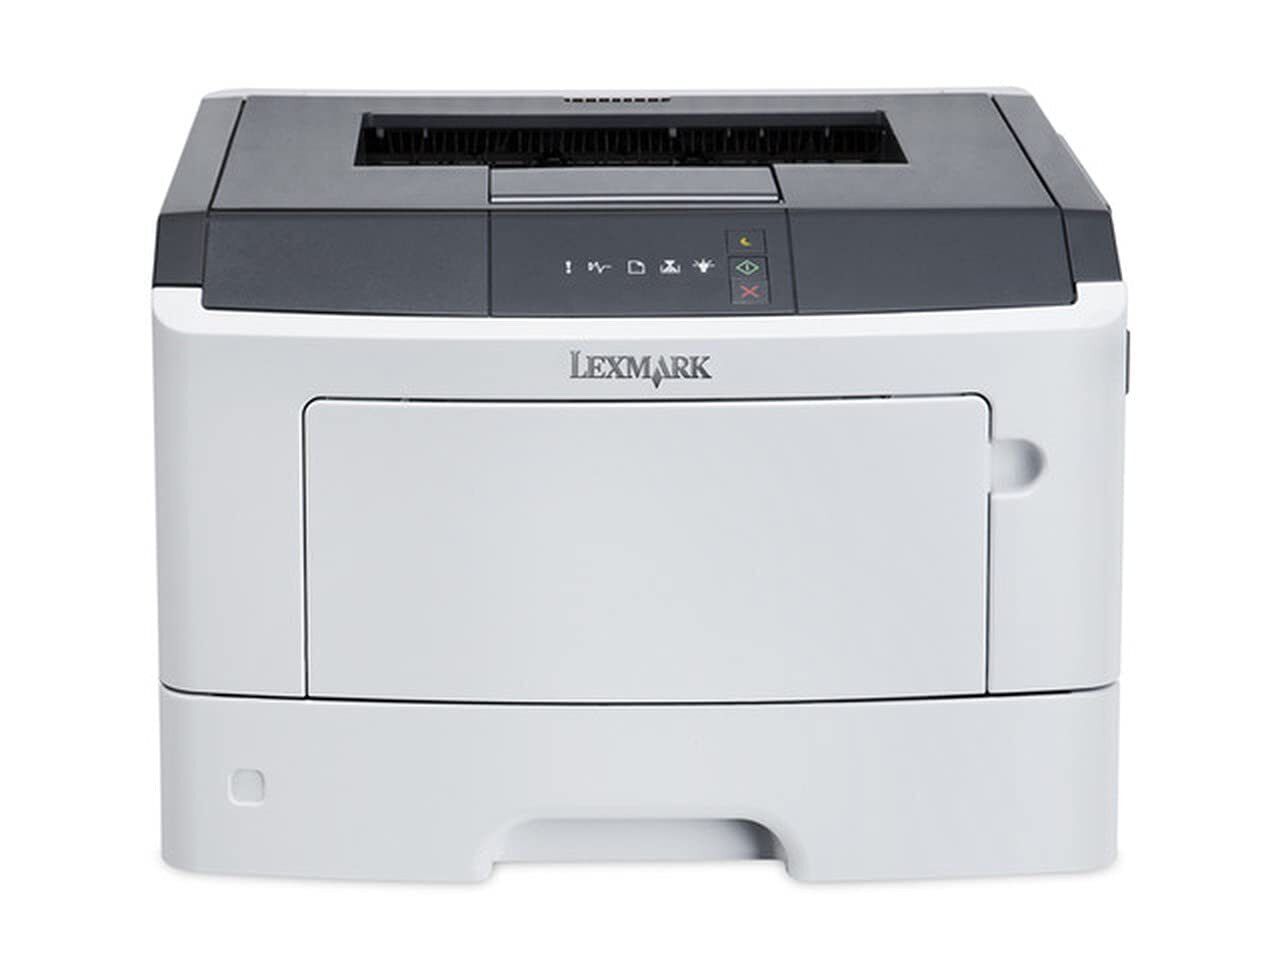 Lexmark Ms410dn Laser Printer - Monochrome - 1200 X 1200 Dpi Print - Plain Paper